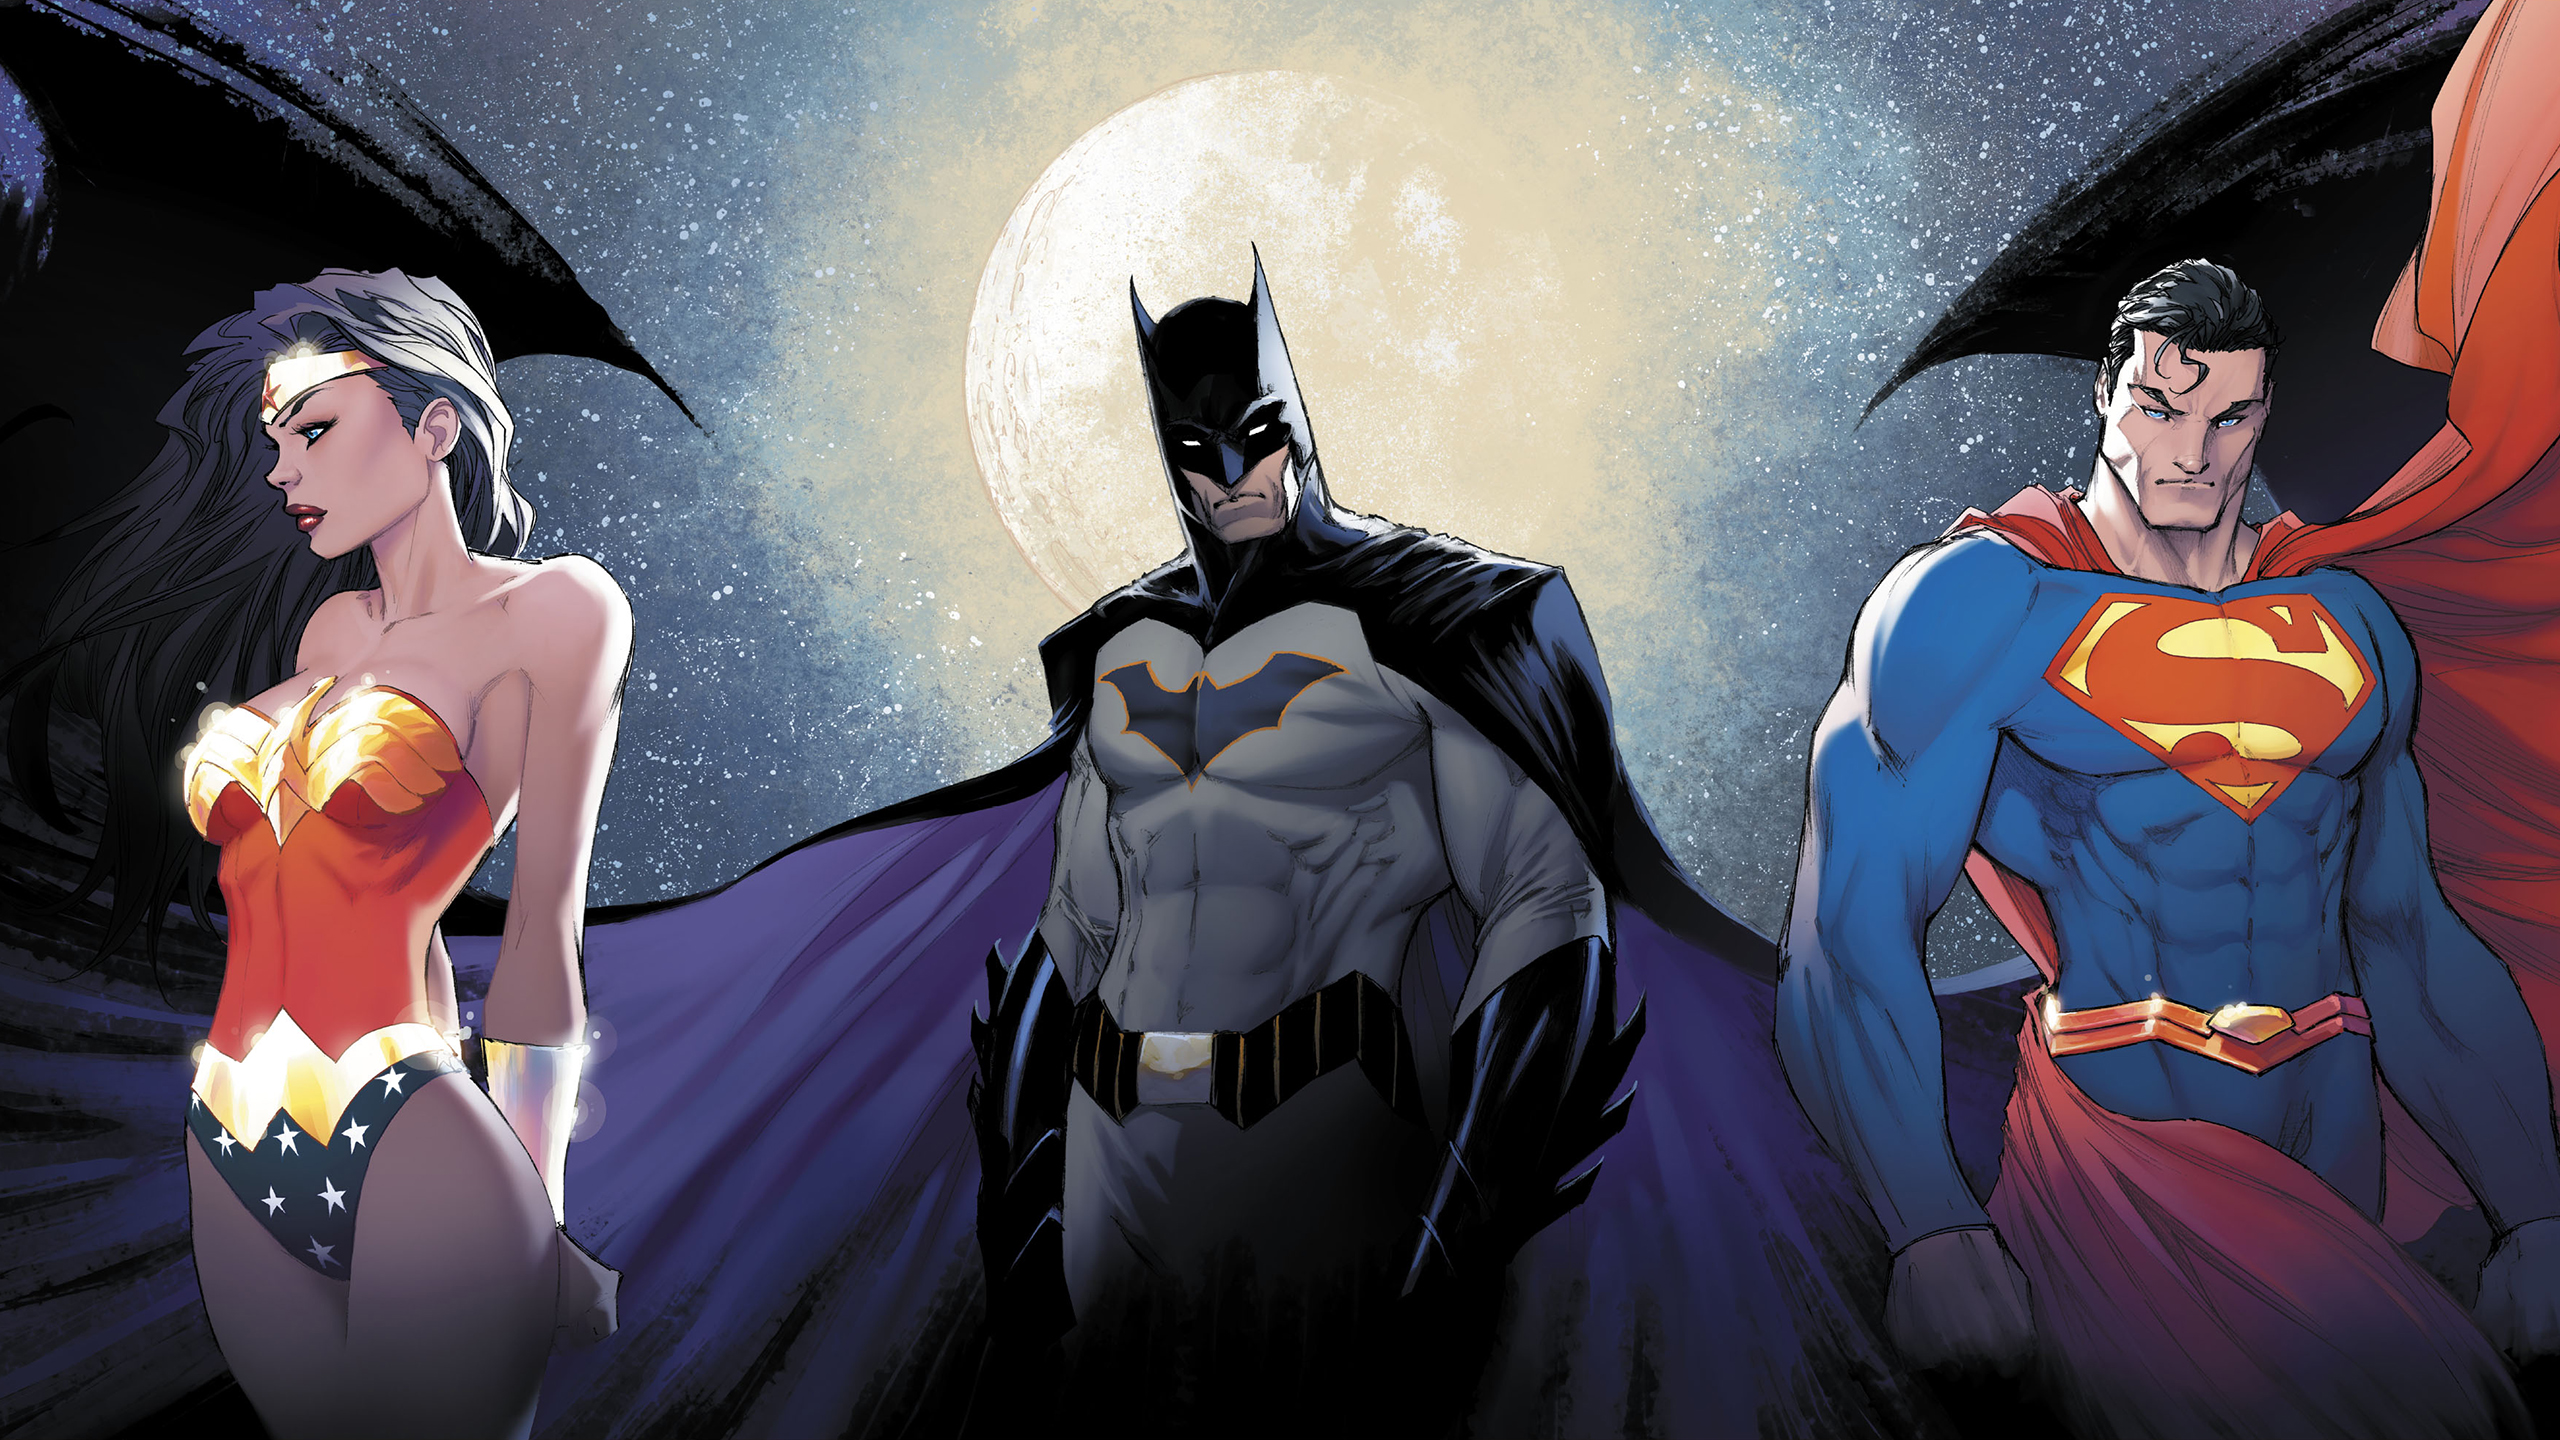 Скачать обои бесплатно Комиксы, Бэтмен, Комиксы Dc, Диана Принс, Супермен, Чудо Женщина, Лига Справедливости, Кларк Кент картинка на рабочий стол ПК